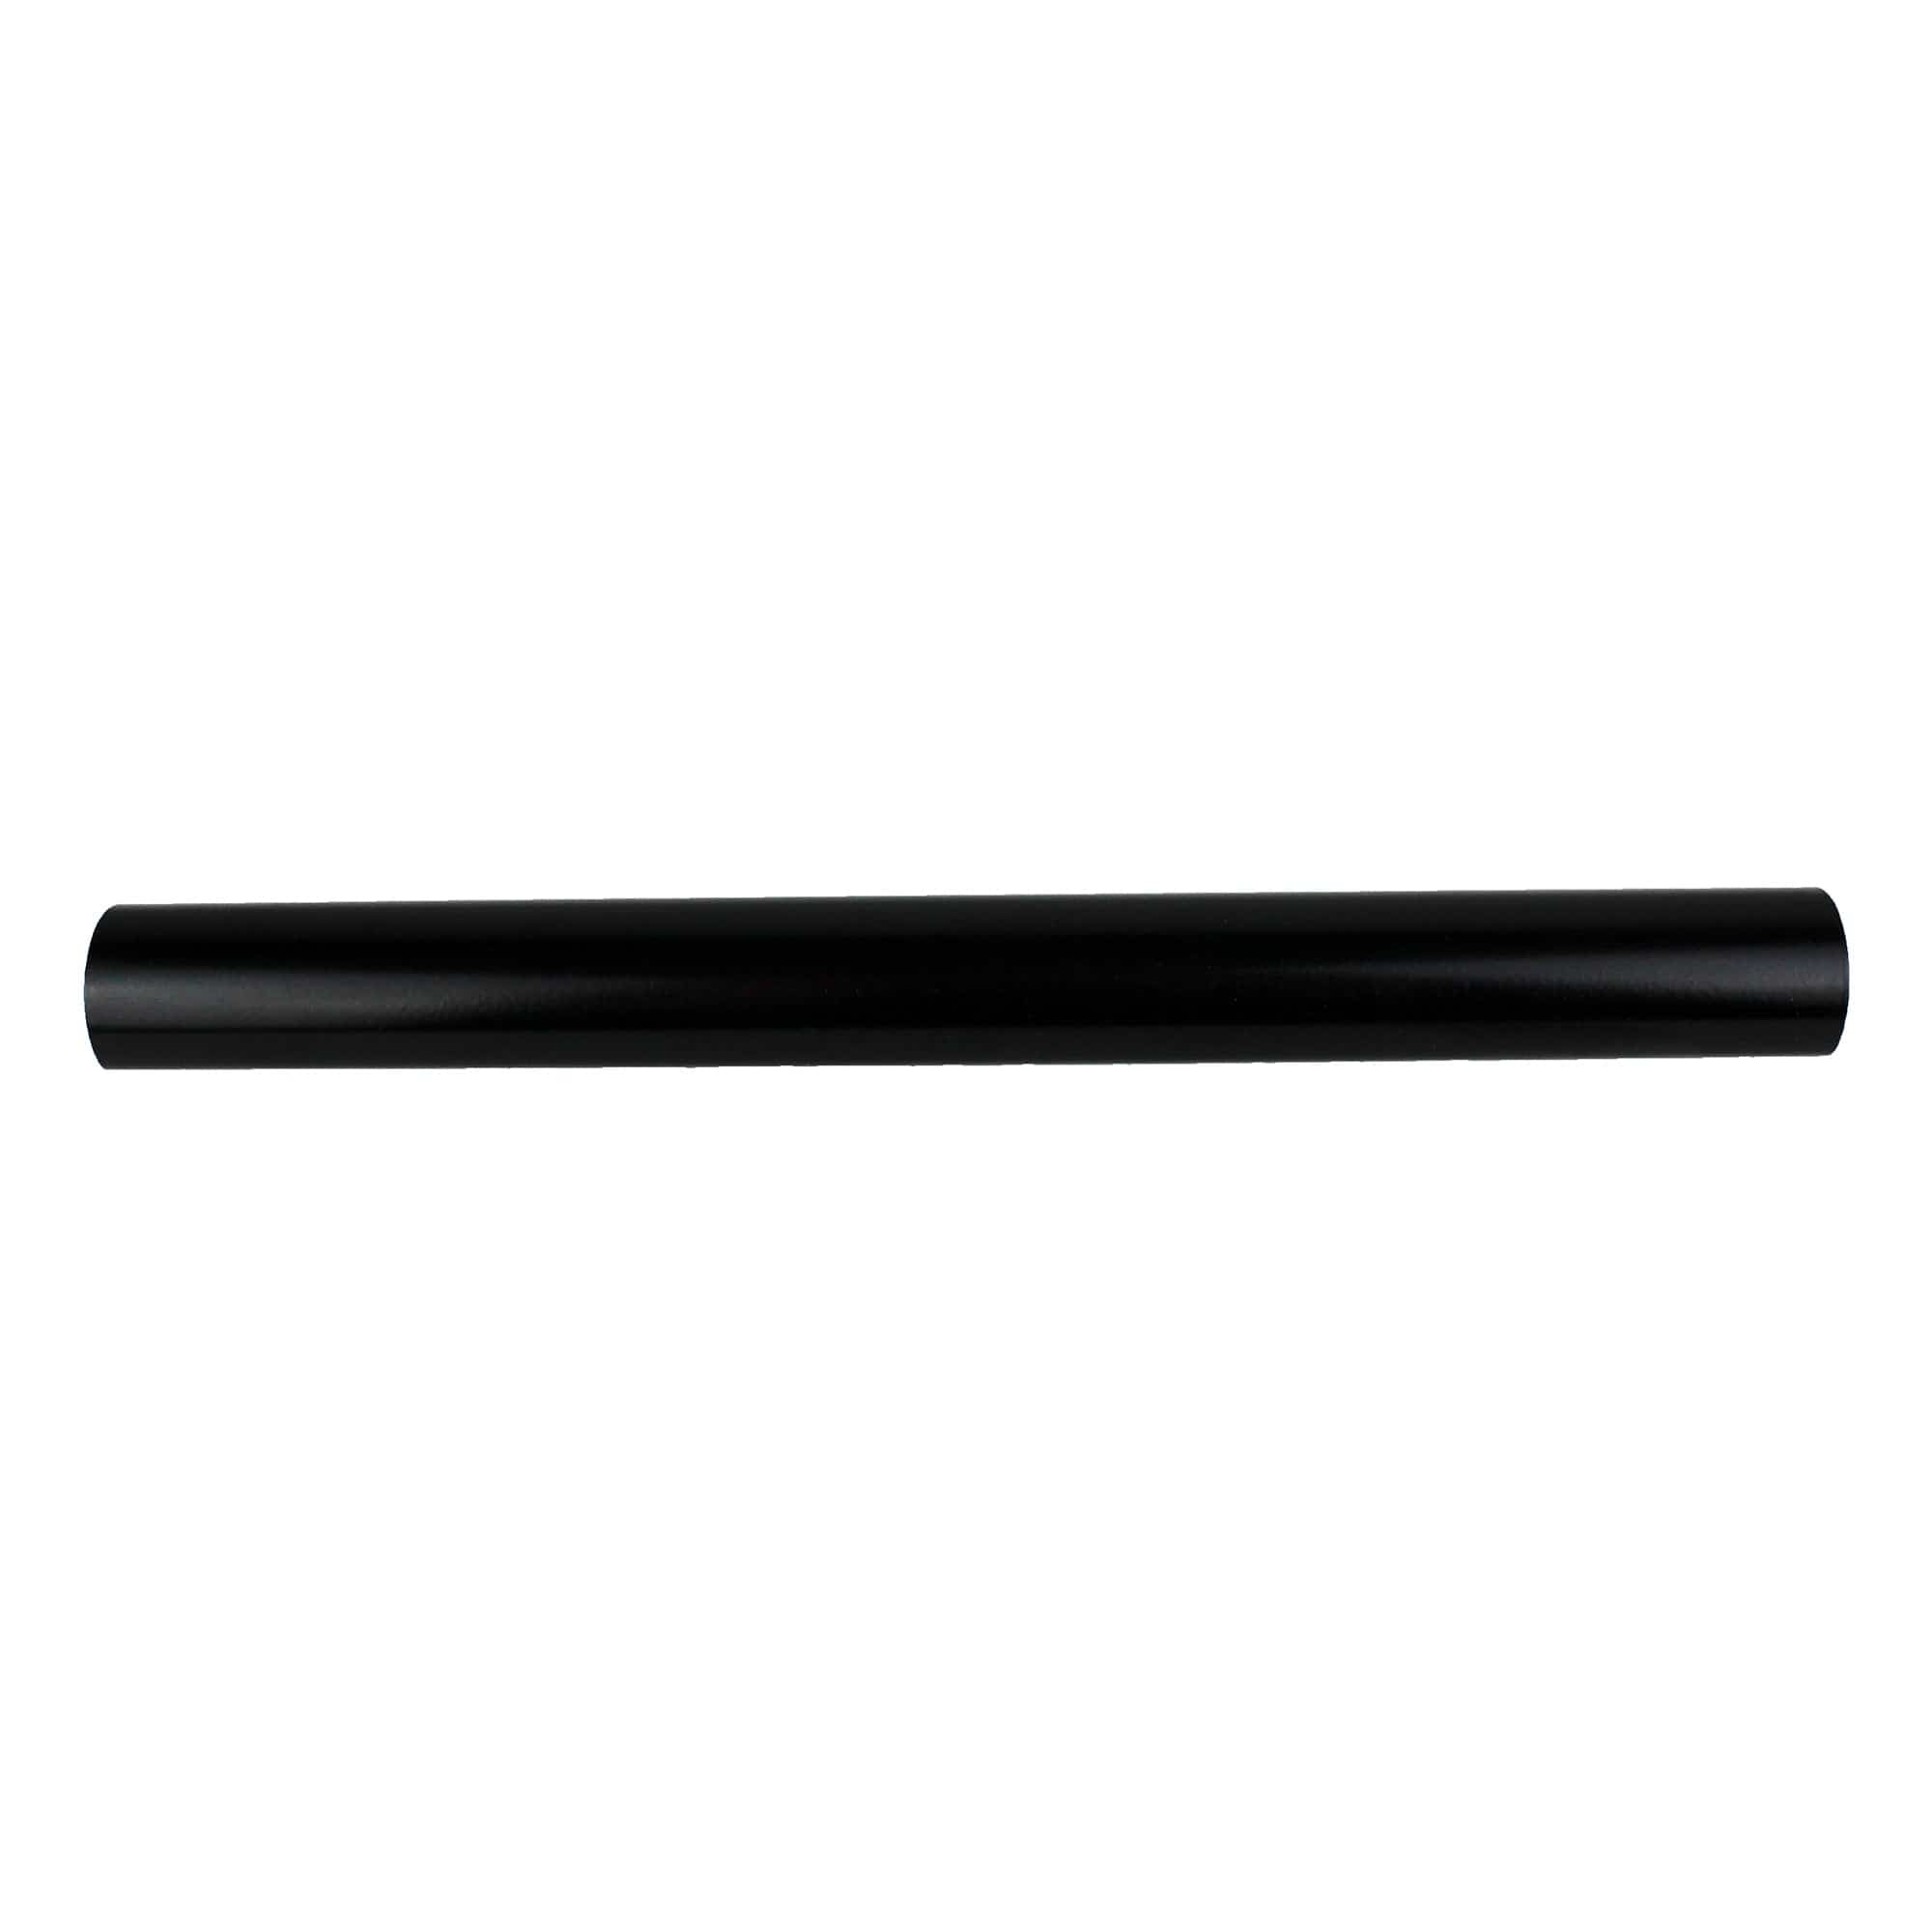 Dometic 3315009.015U 15" Awning Slide Topper Extension Kit - Black